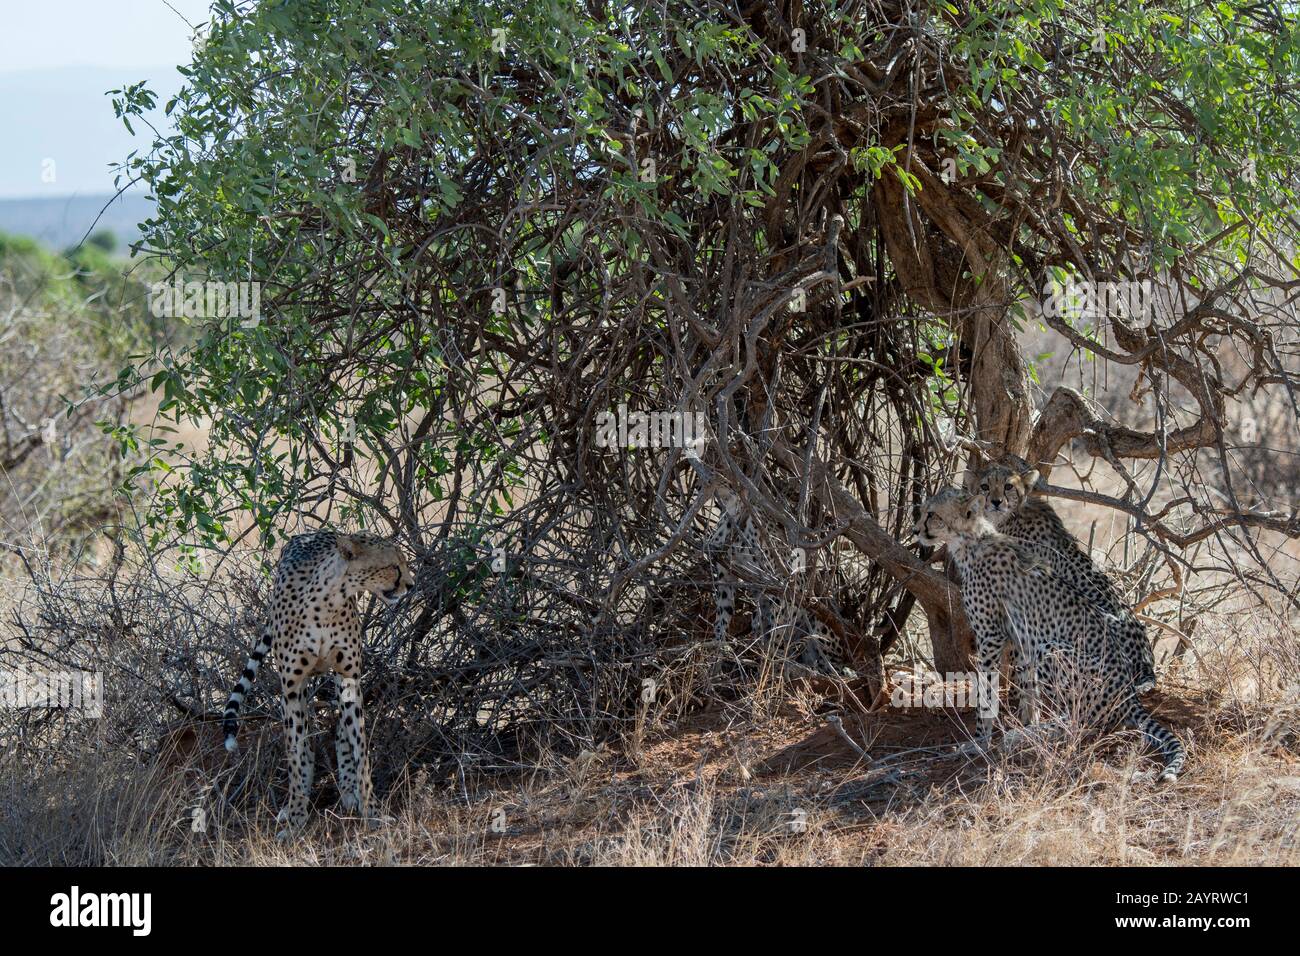 Cheetahs (Acinonyx jubatus) in the shade of a bush during the heat of the day in the Samburu National Reserve in Kenya. Stock Photo